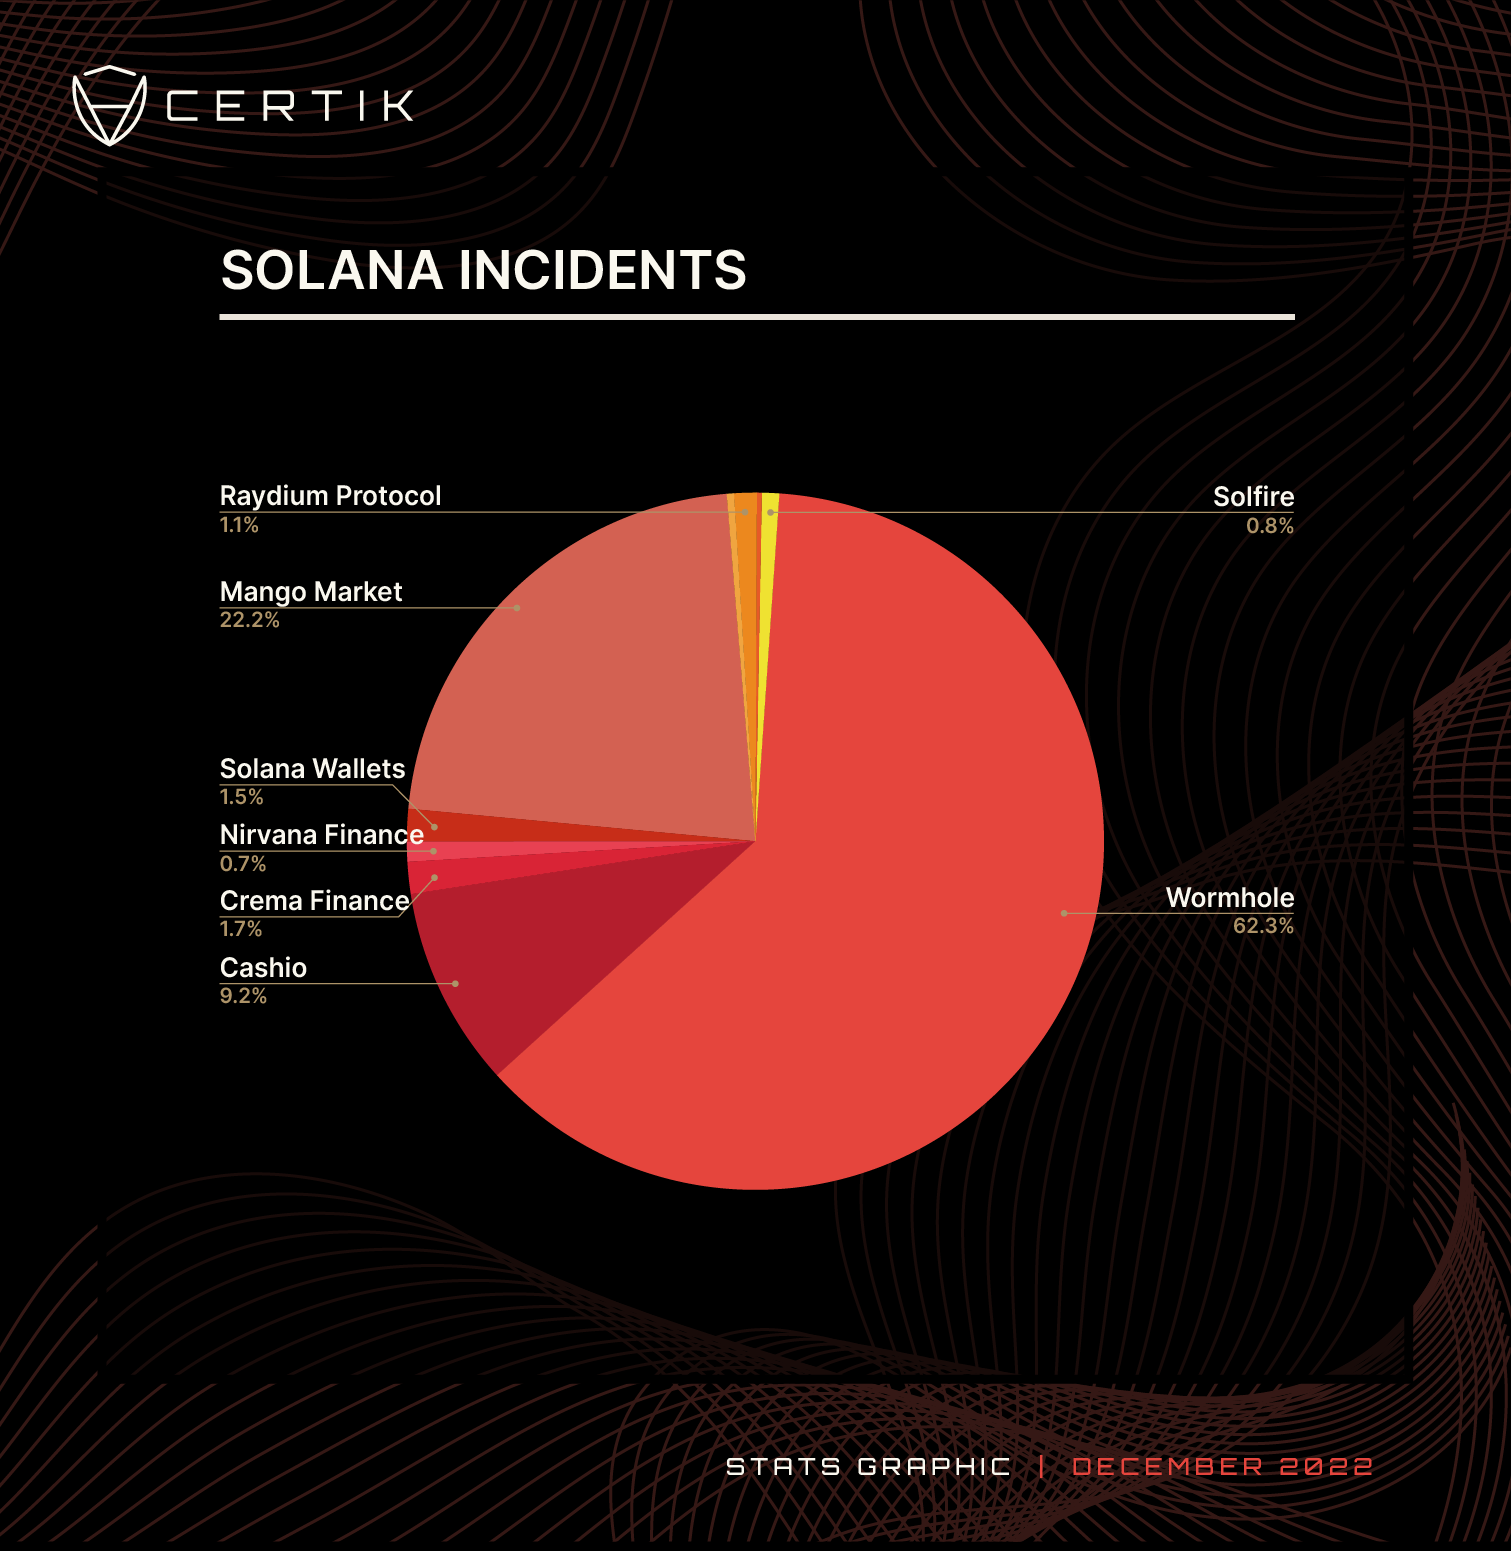 Solana Incidents